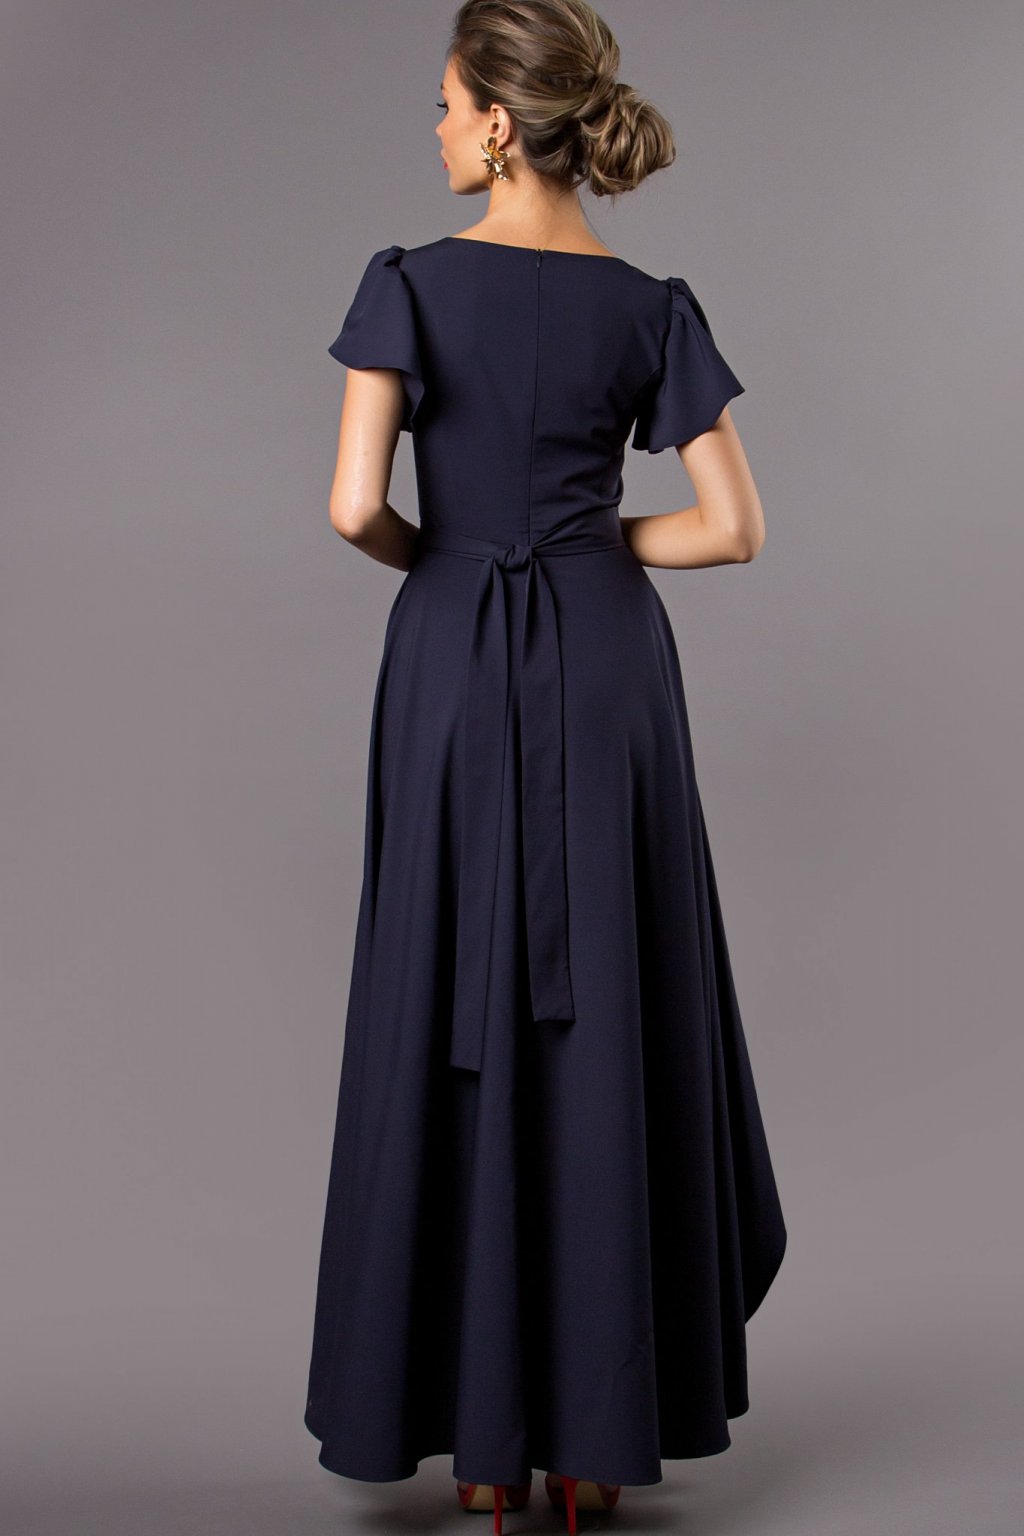 Платье Асимметрия цвет темно-синий  (П-50-6) - 4